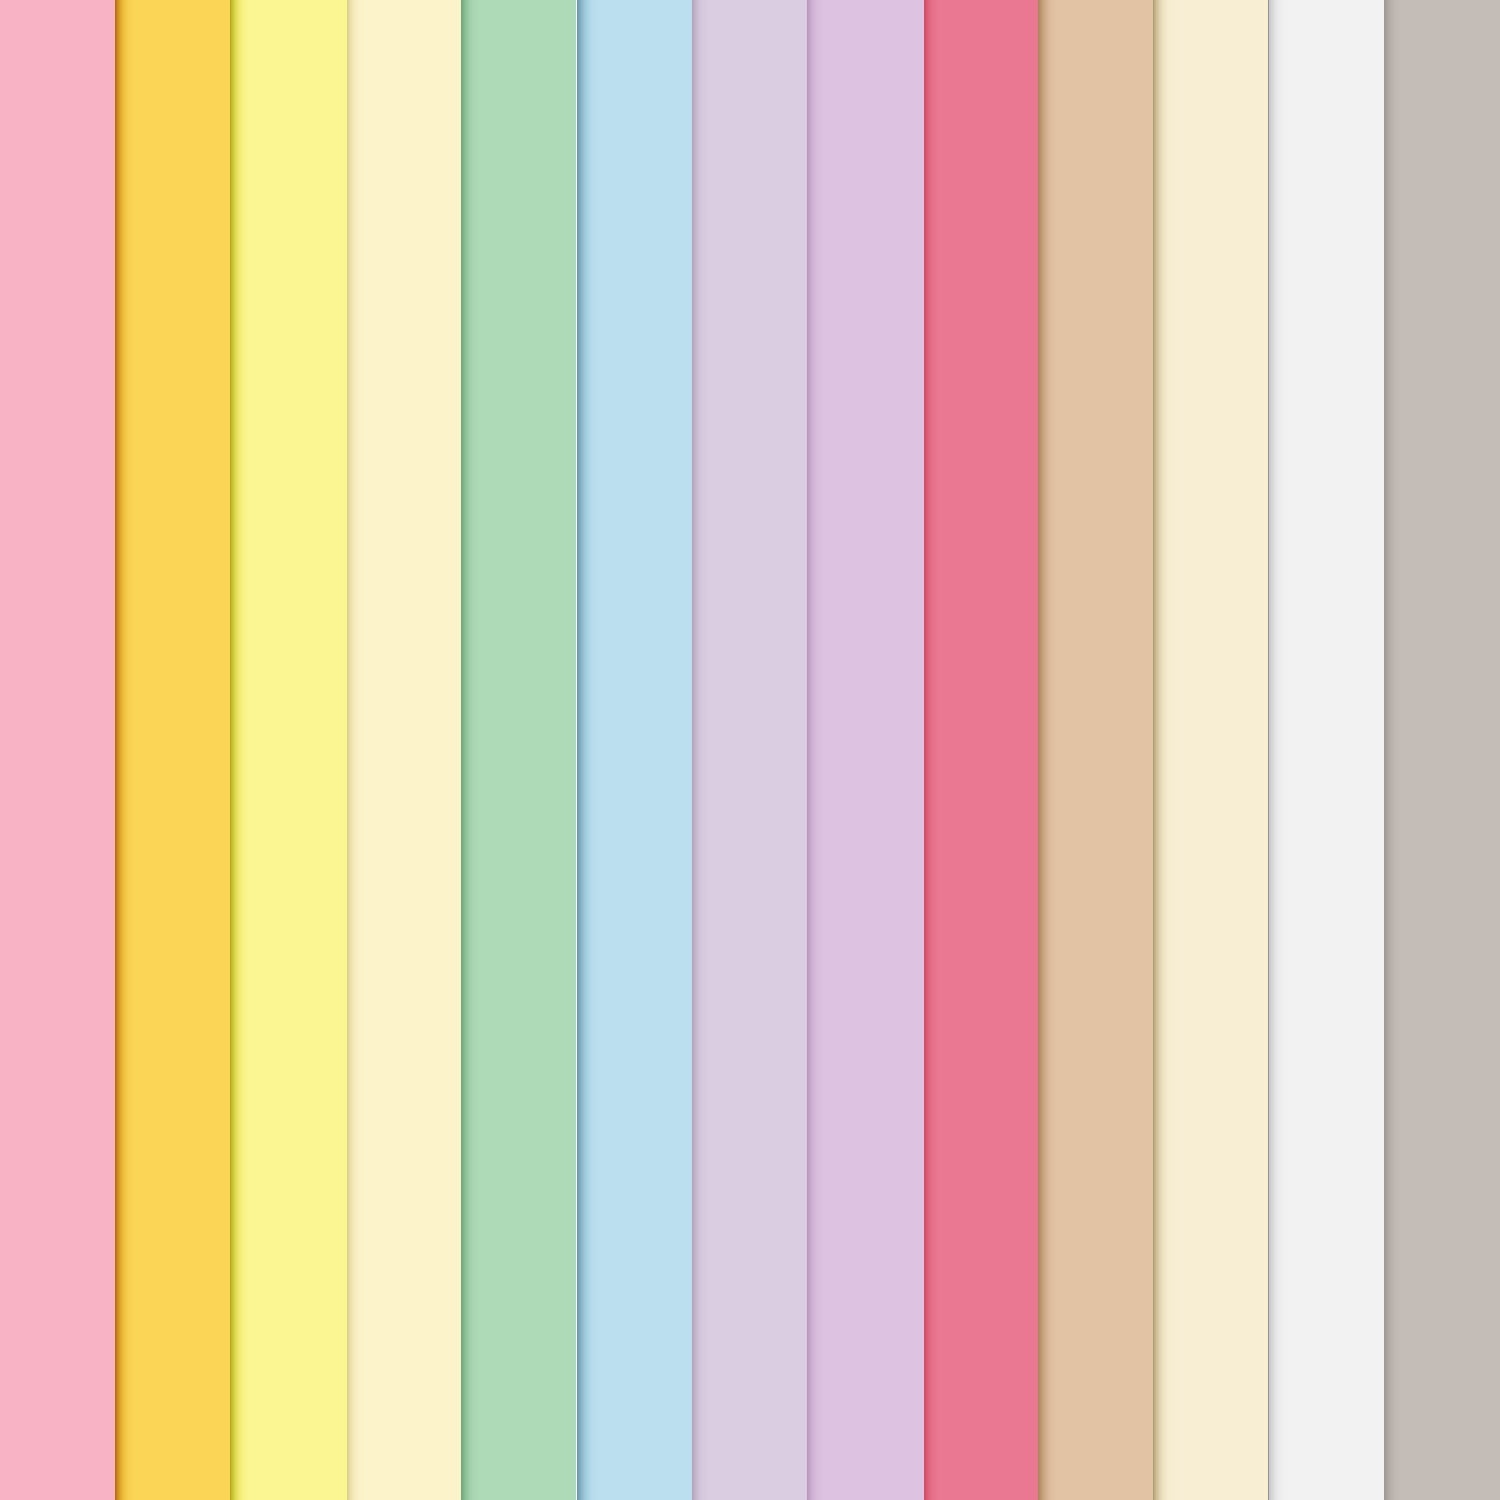 A5 Bright & Pastel Coloured Card Sheets 160gsm - Menus Invites School Charts